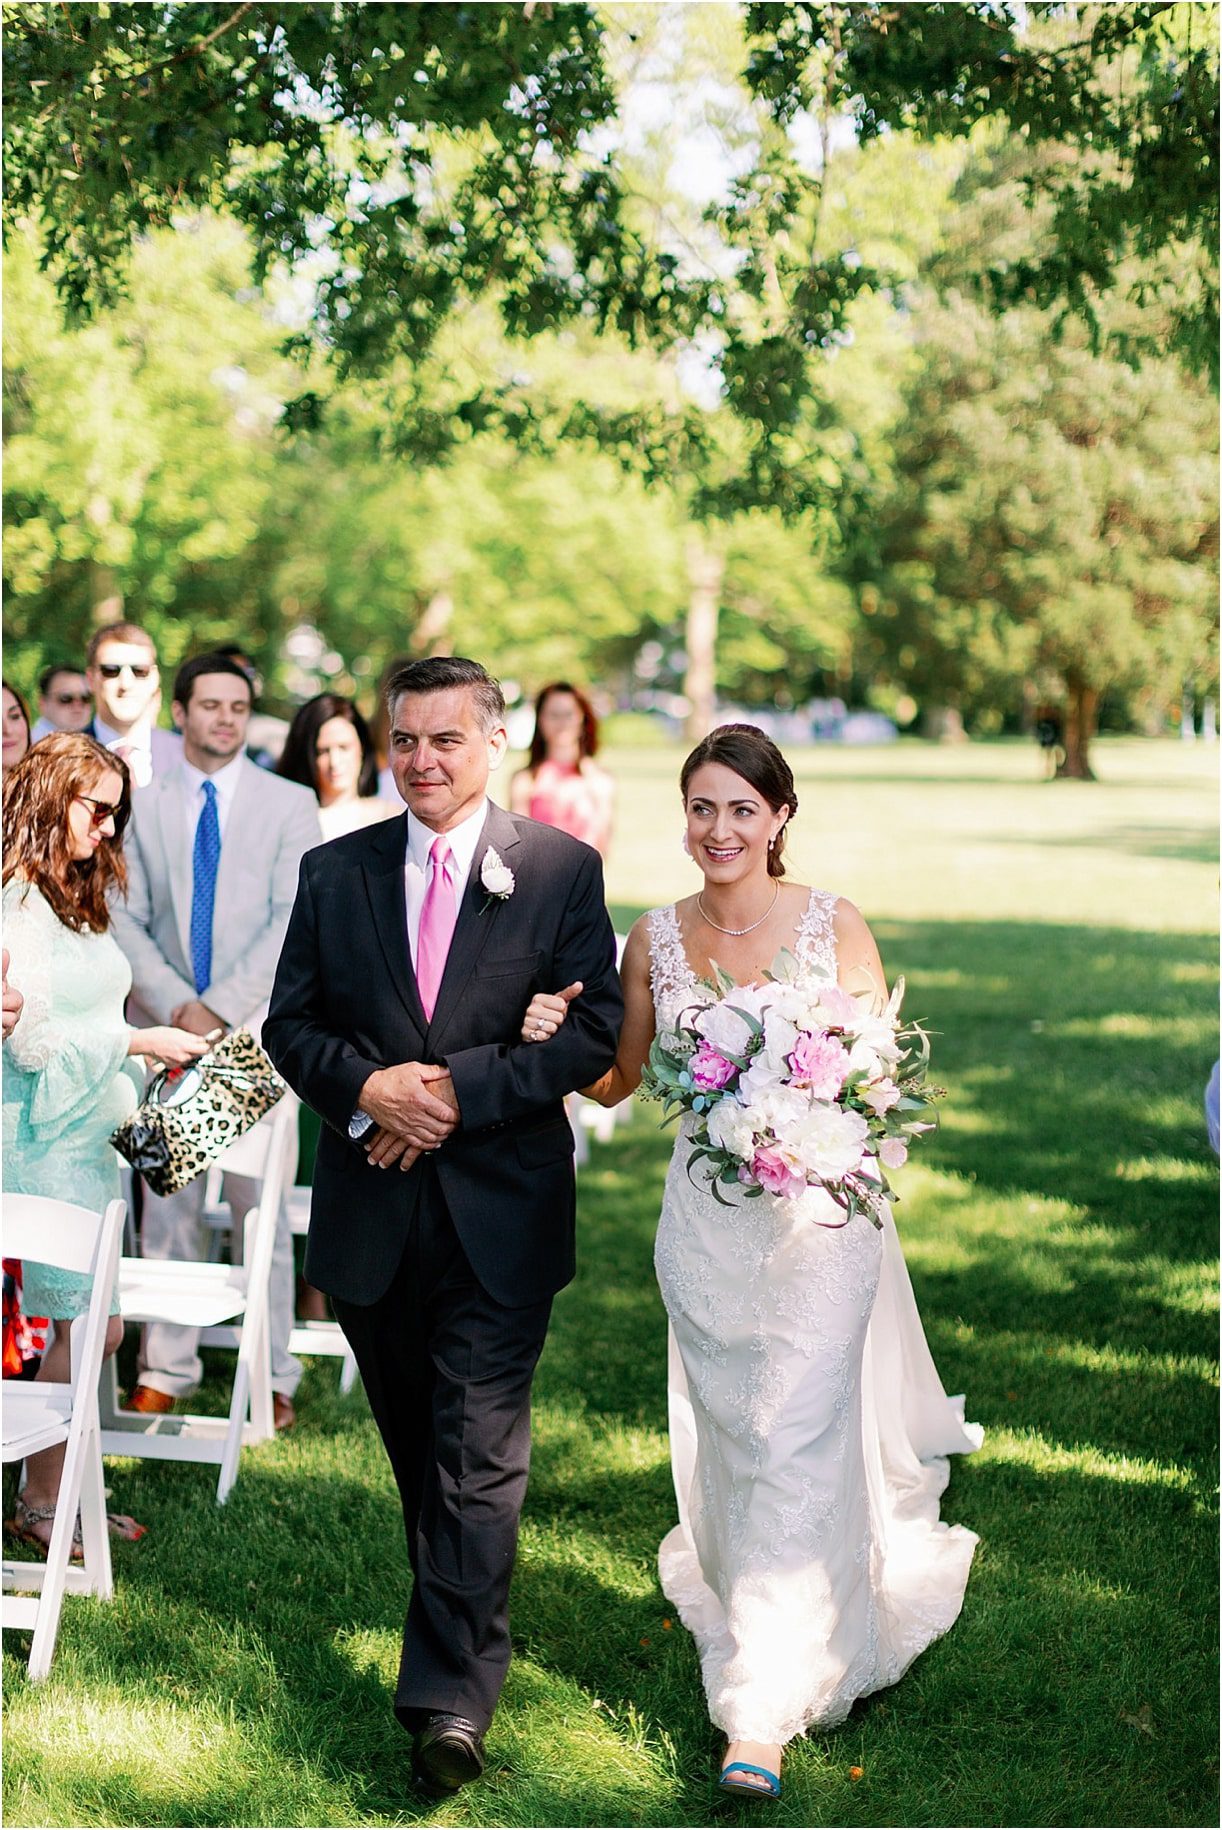 Cape Charles Wedding Venues | Blue Wedding | Hill City Bride Virginia Weddings Blog | Father Walking Bride Down Aisle